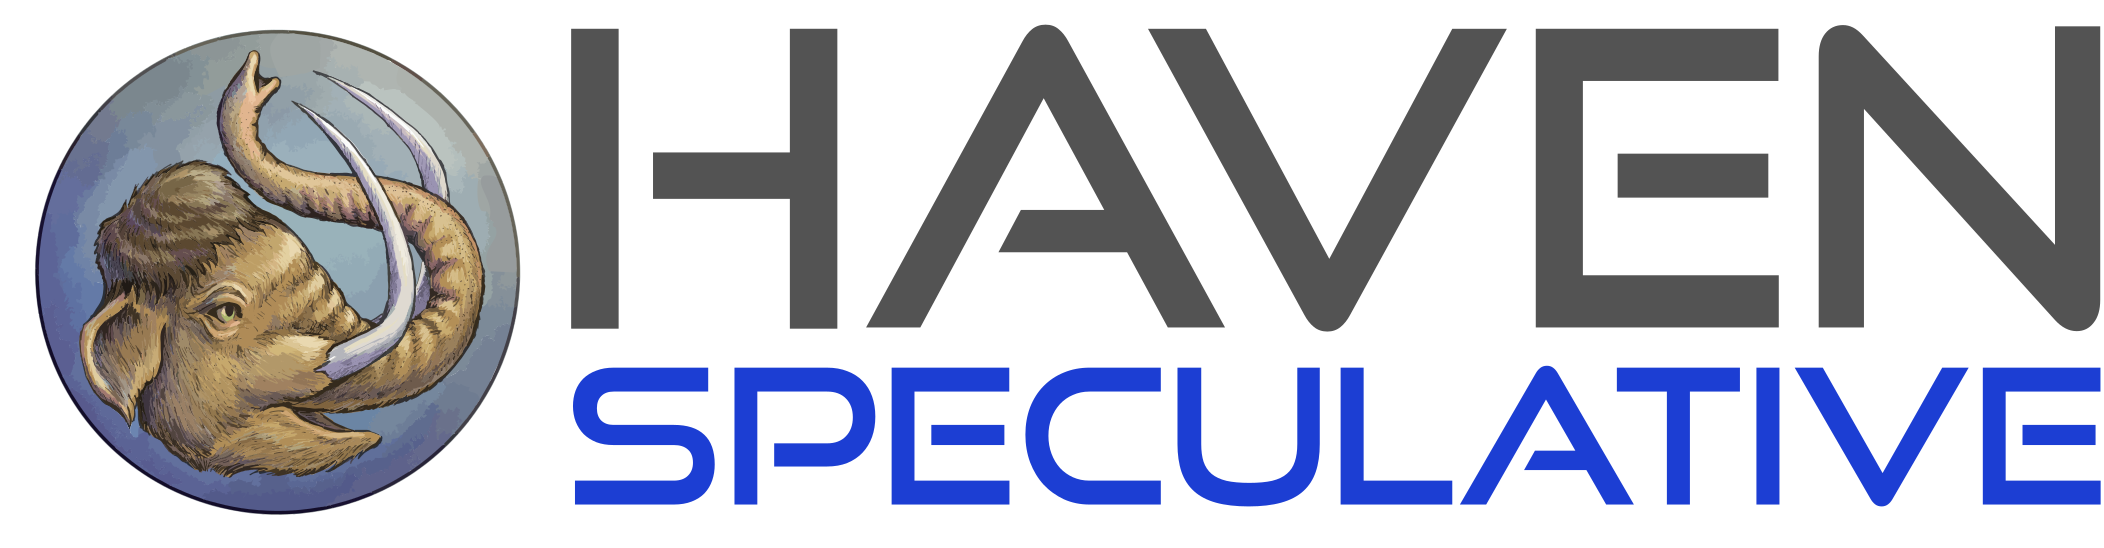 Haven Spec logo